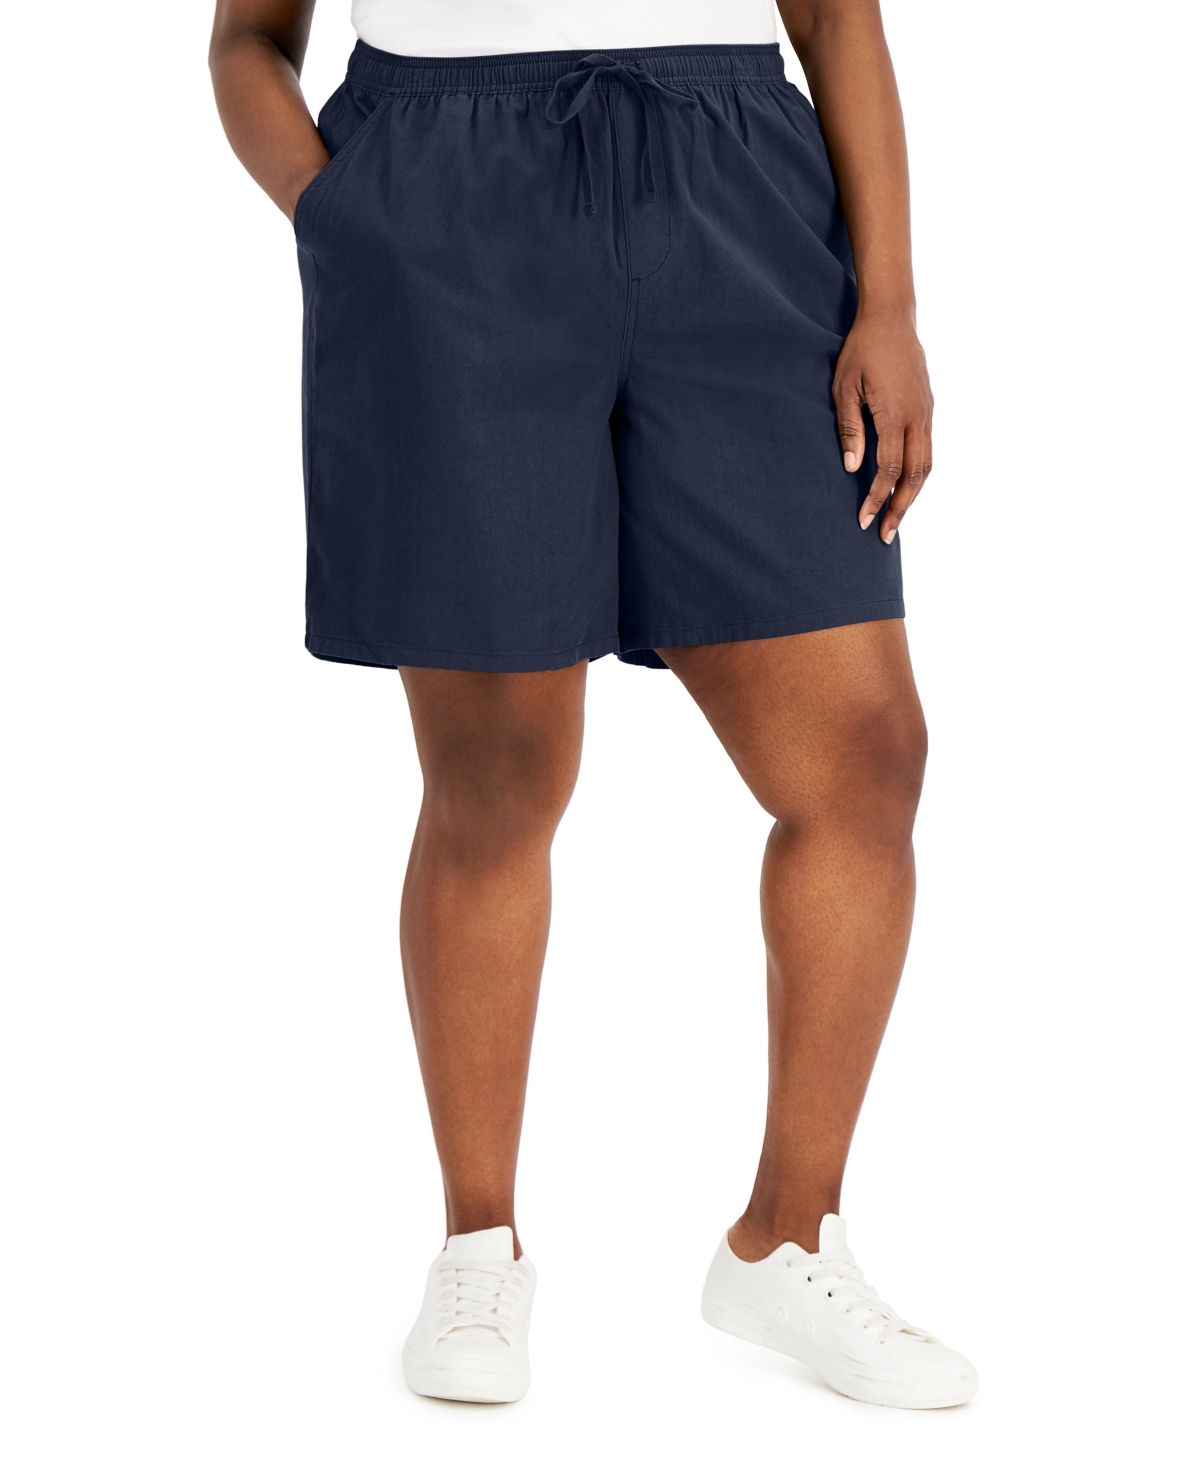 Karen Scott Plus Size Gemma Cotton Shorts, Created for Macy's